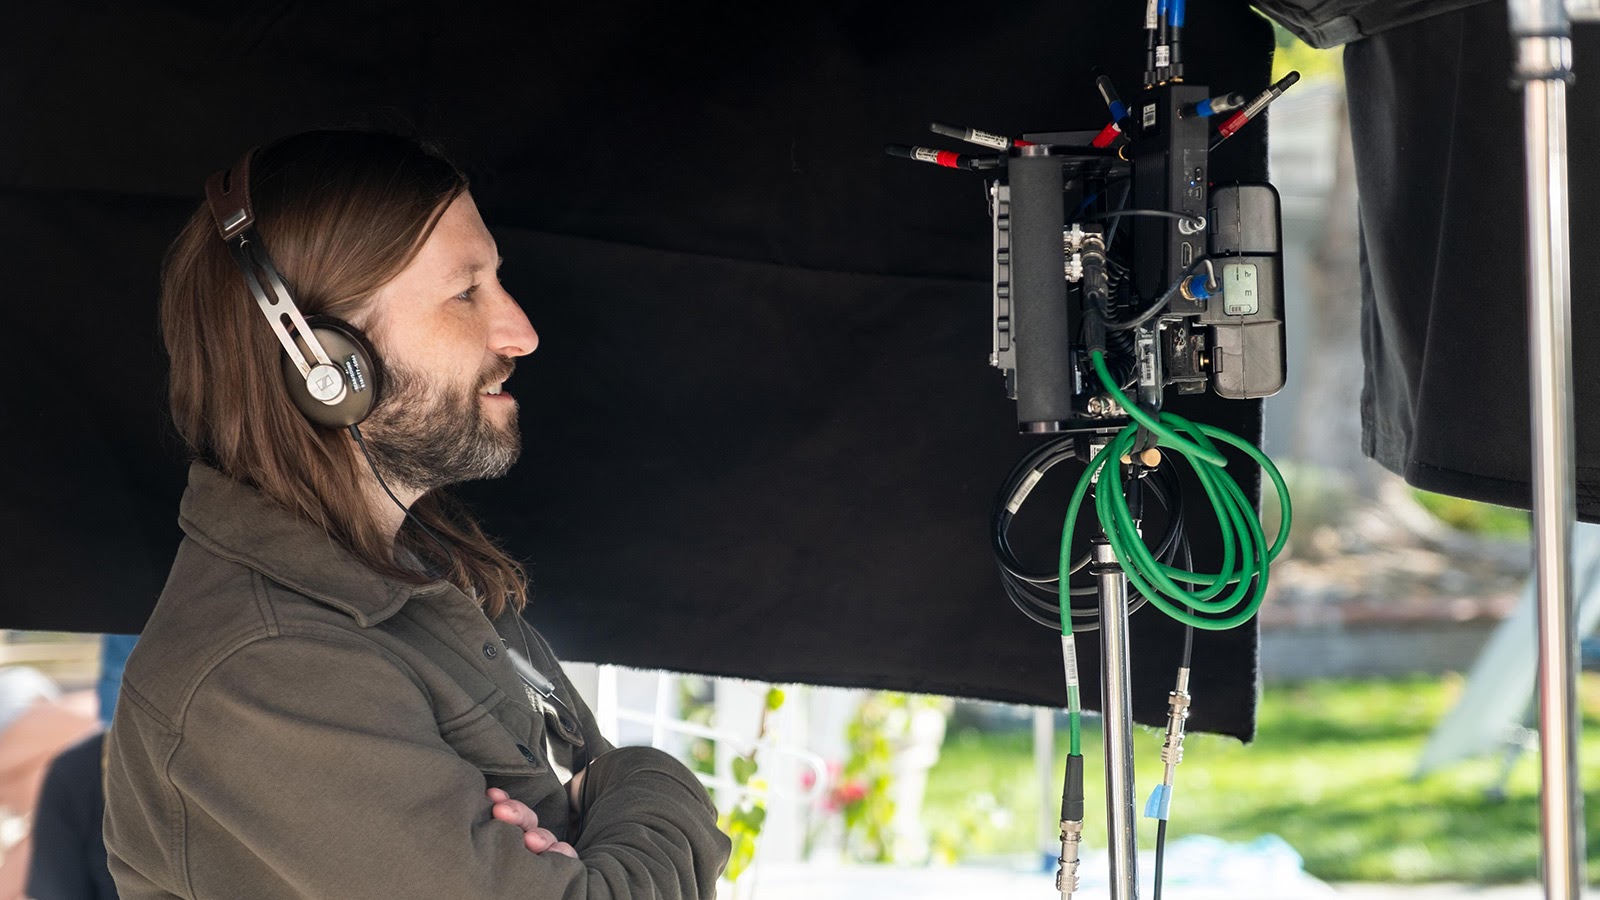 Director/writer Sam Zvibleman watches the monitor